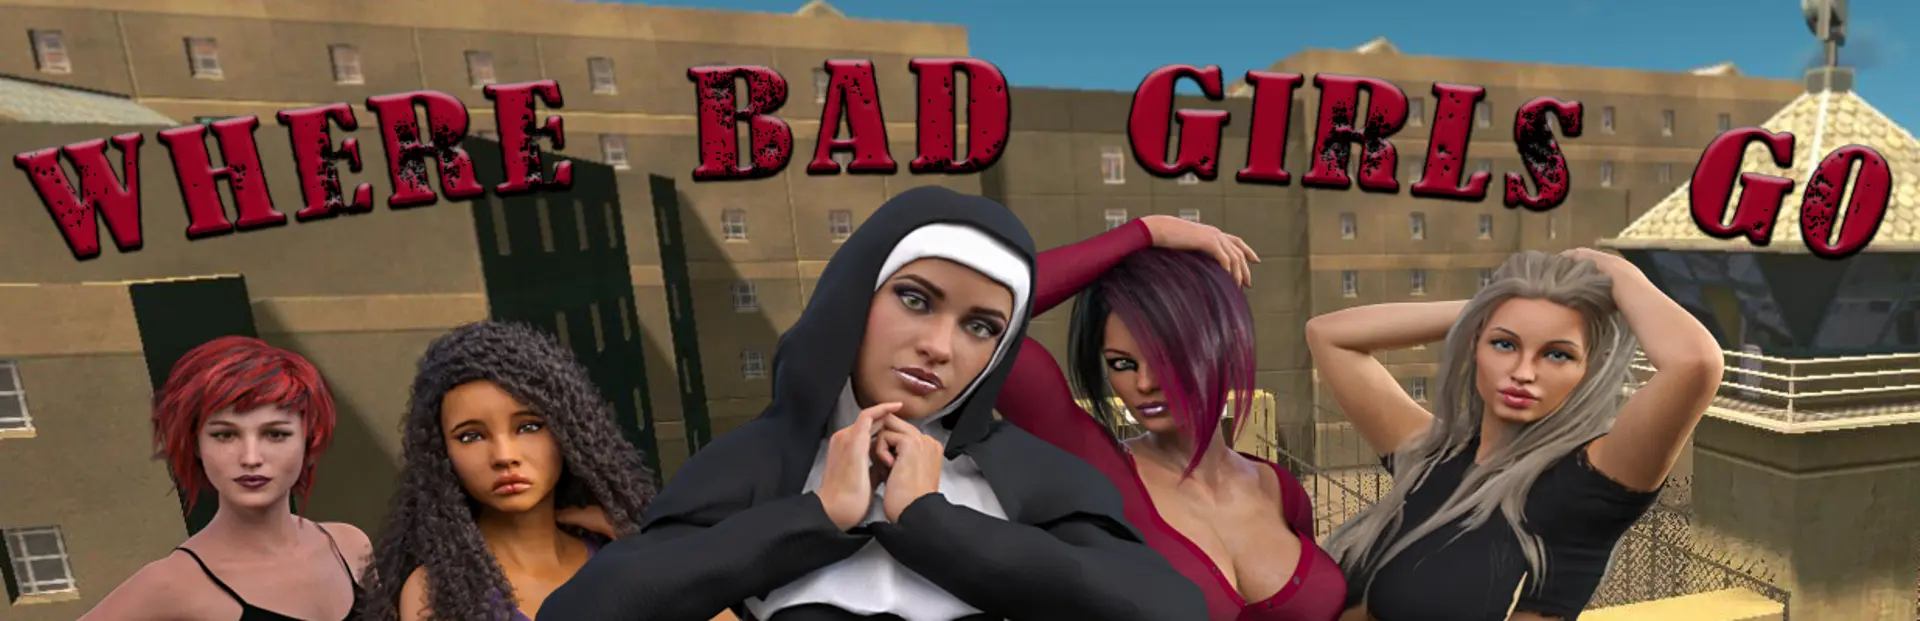 Where Bad Girls Go [v0.2] main image